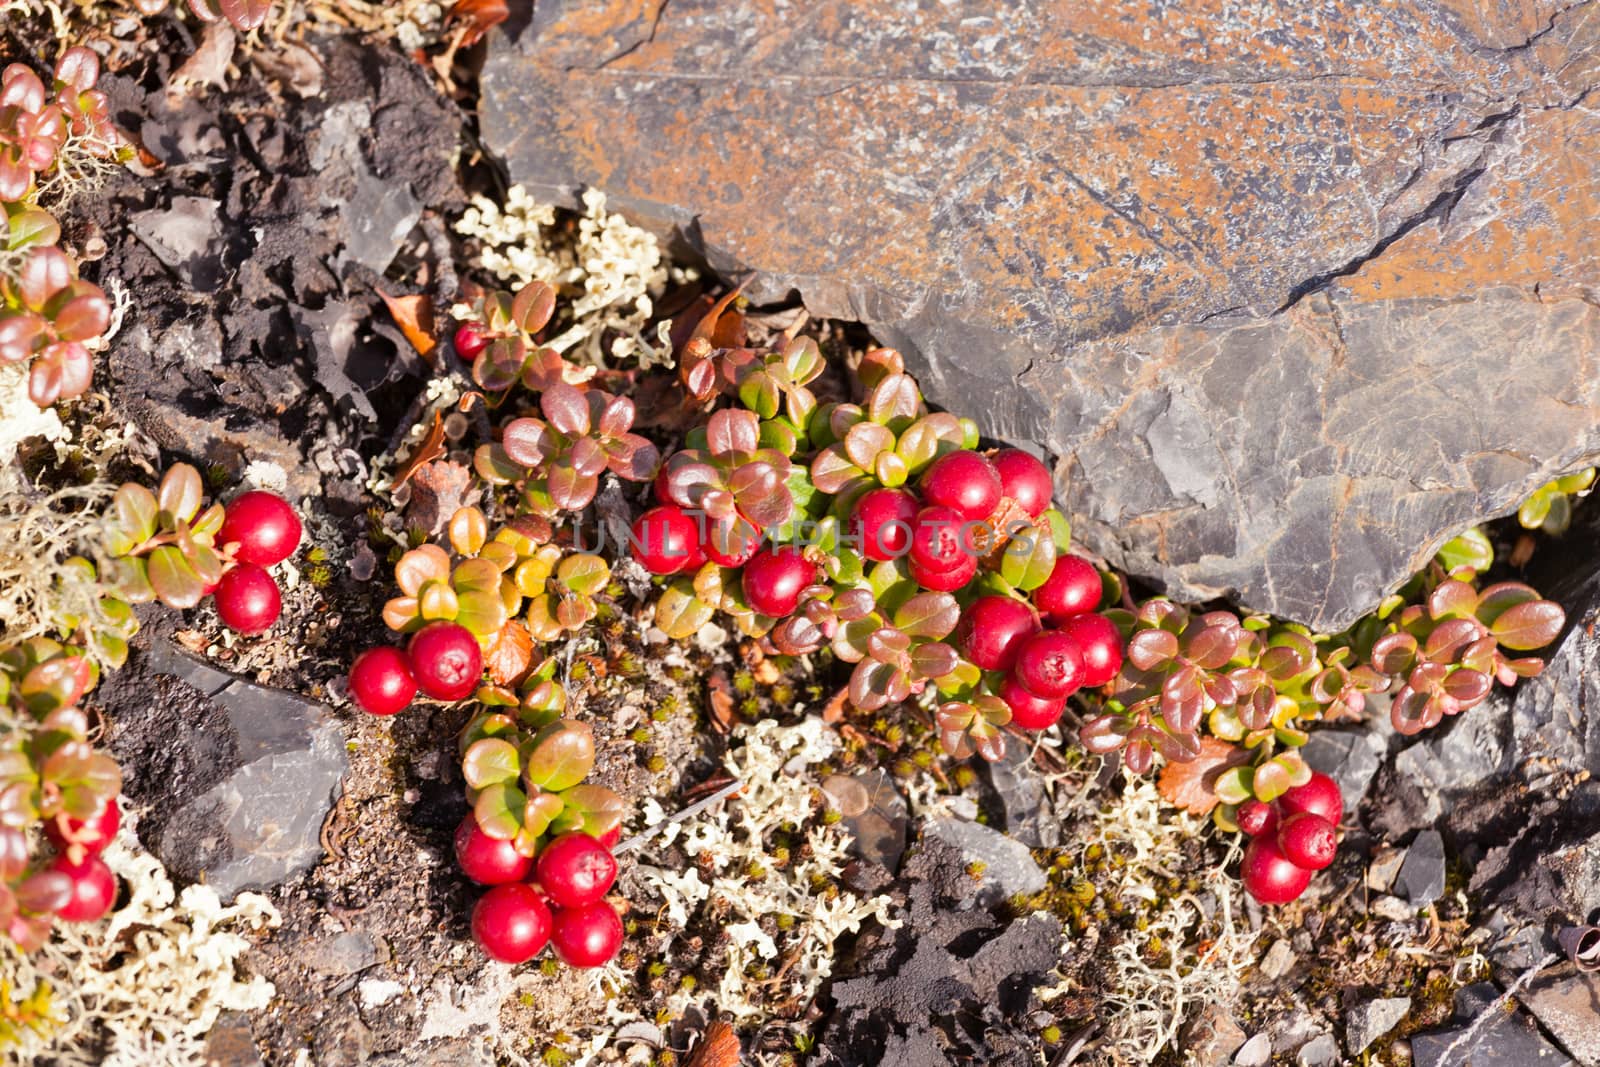 Cranberry plants, Vaccinium vitis-idaea, with ripe berries grow low on ground between rocks